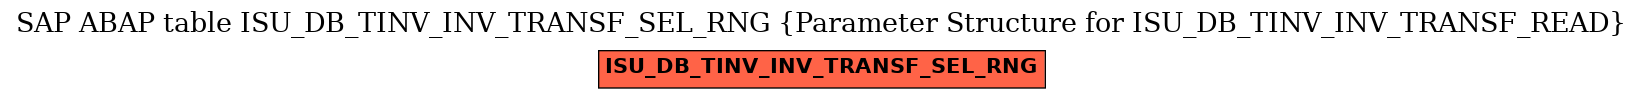 E-R Diagram for table ISU_DB_TINV_INV_TRANSF_SEL_RNG (Parameter Structure for ISU_DB_TINV_INV_TRANSF_READ)